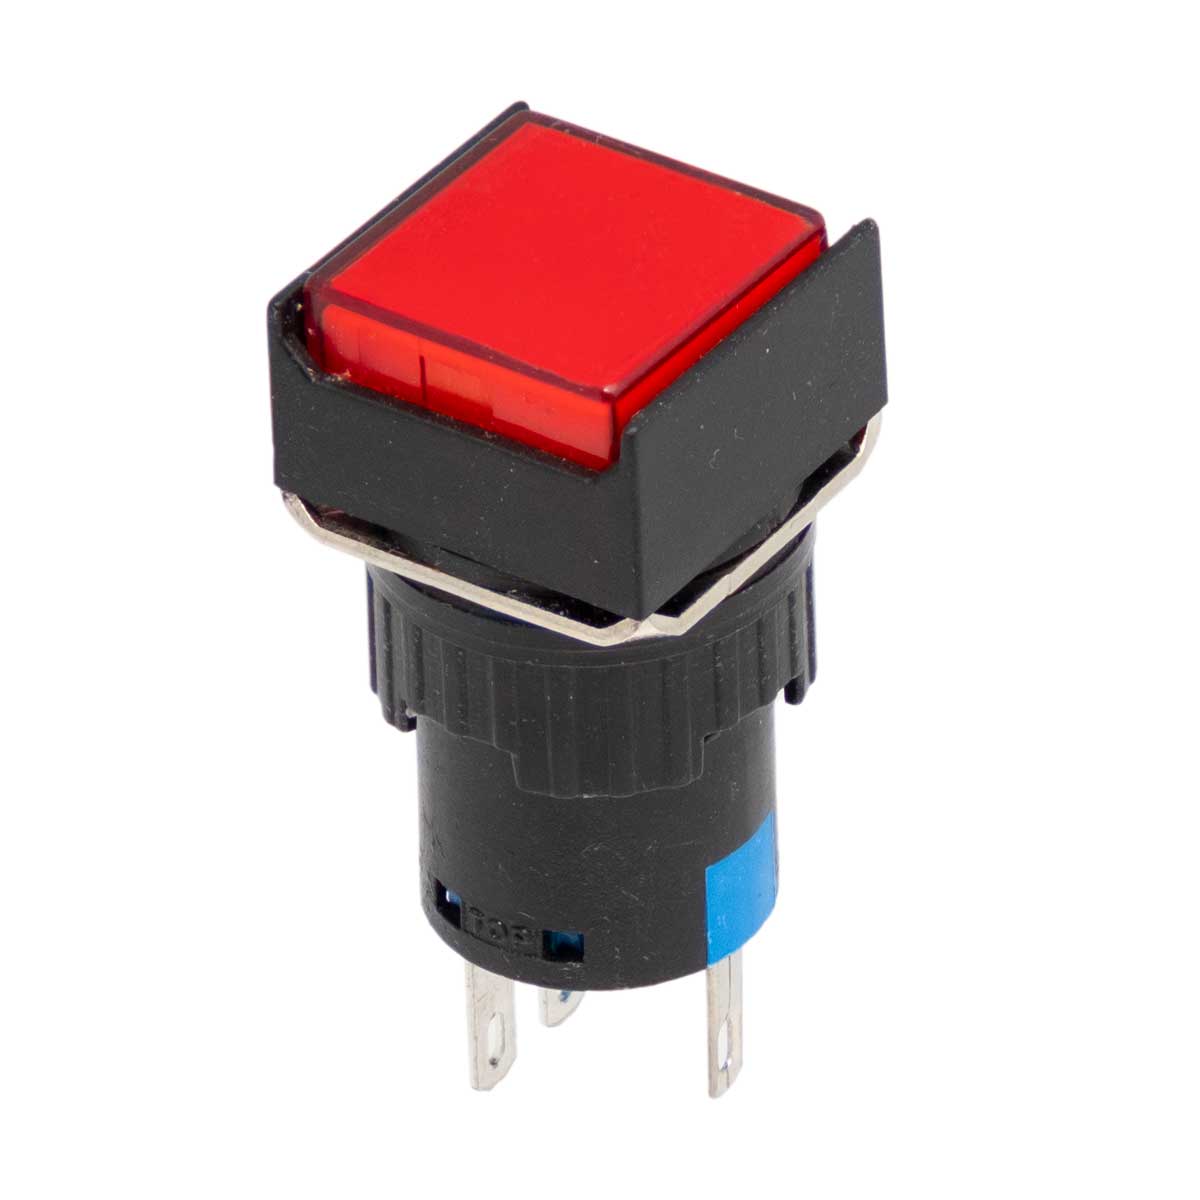 Interruptor de botó il·luminat vermell (SPST), Muntatge a Panell, 3A/220V